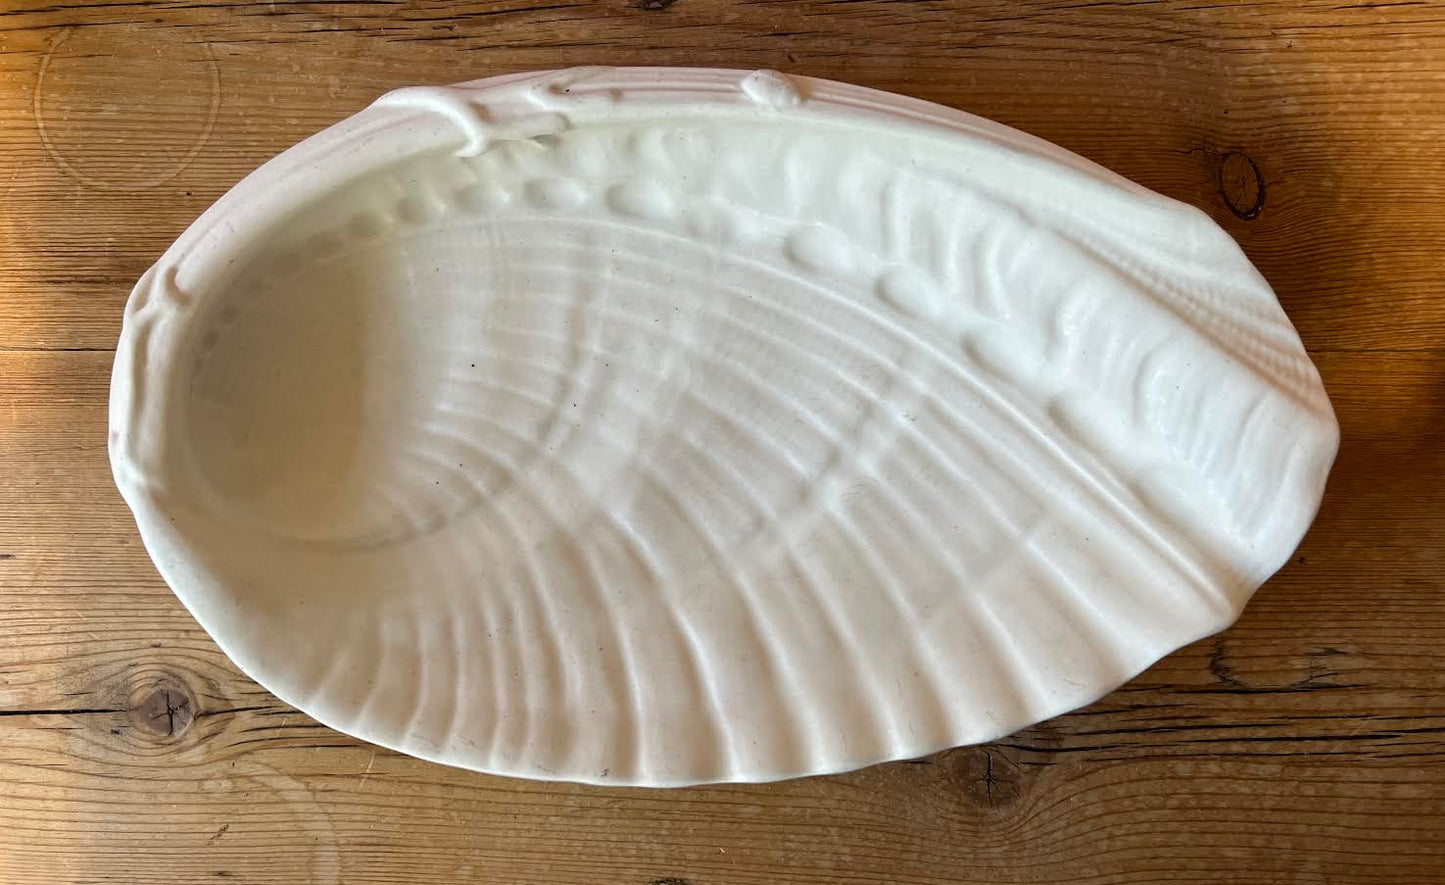 Shell Shaped Bowl